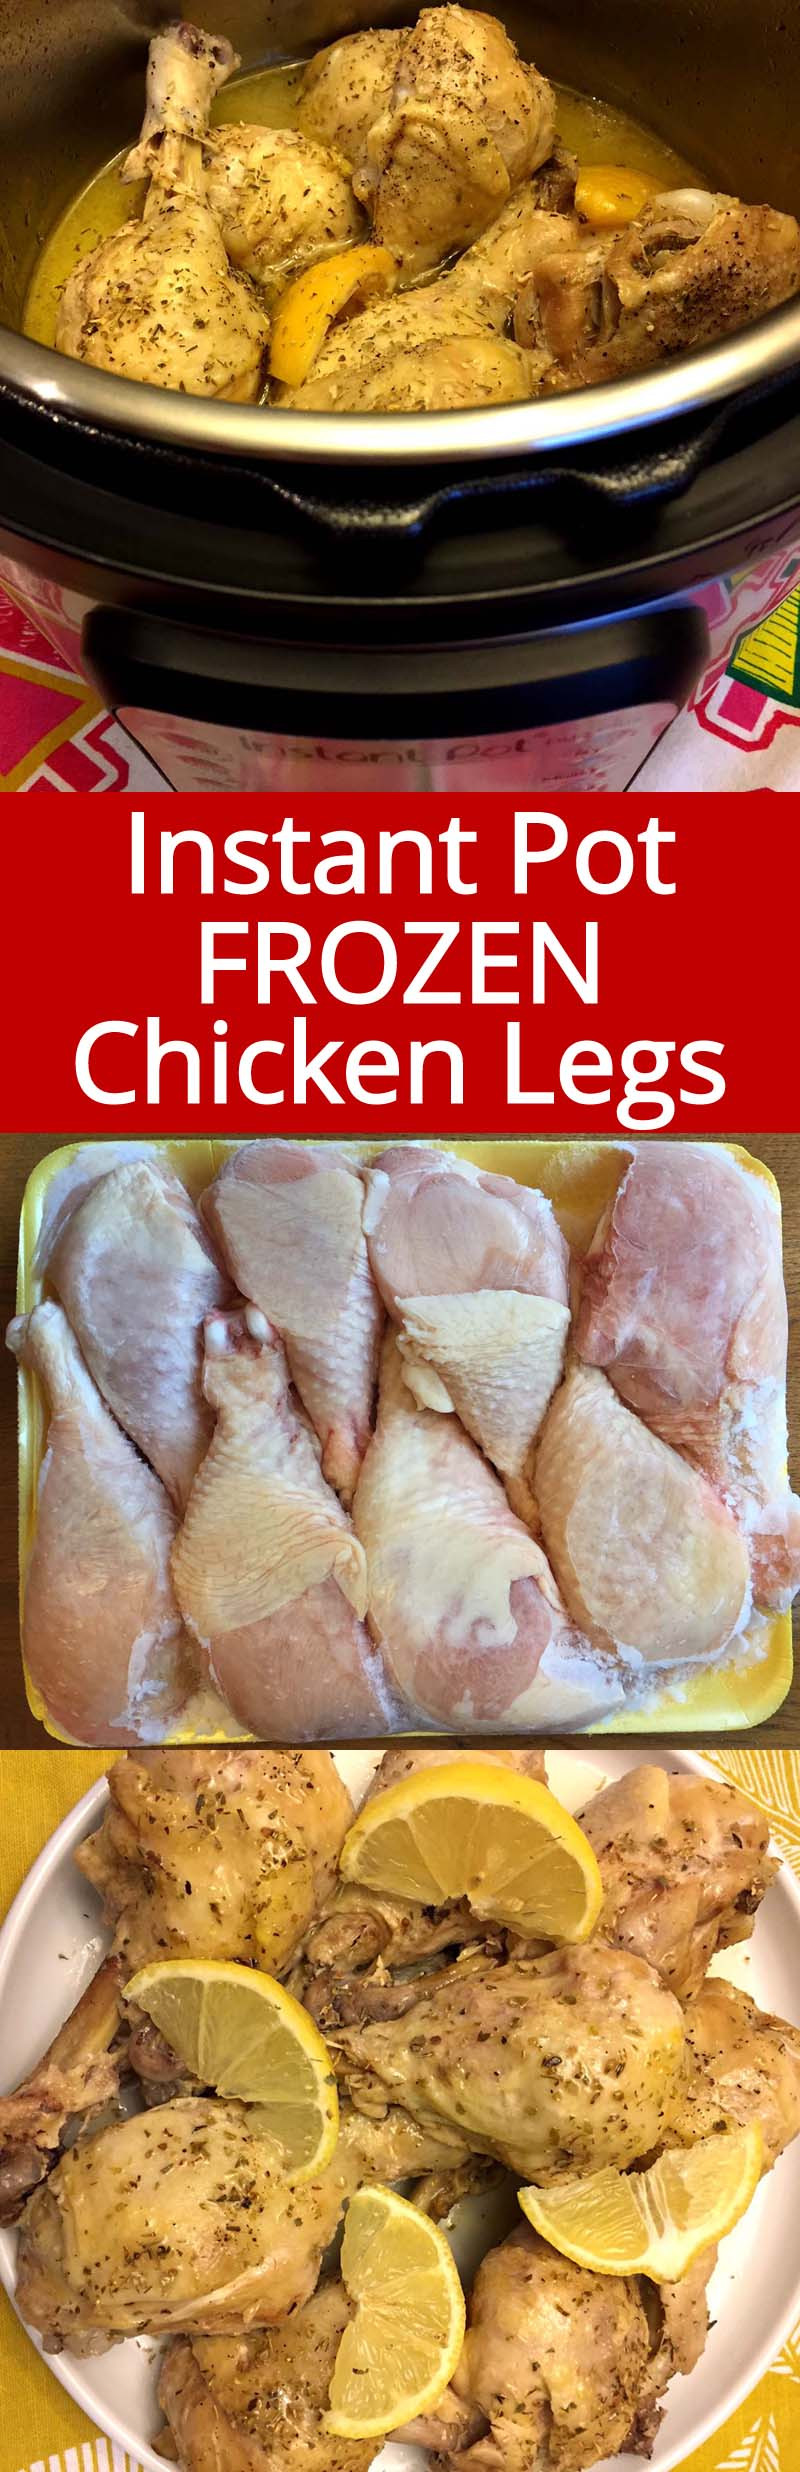 Instant Pot Frozen Chicken Breasts
 Instant Pot Frozen Chicken Legs With Lemon And Garlic